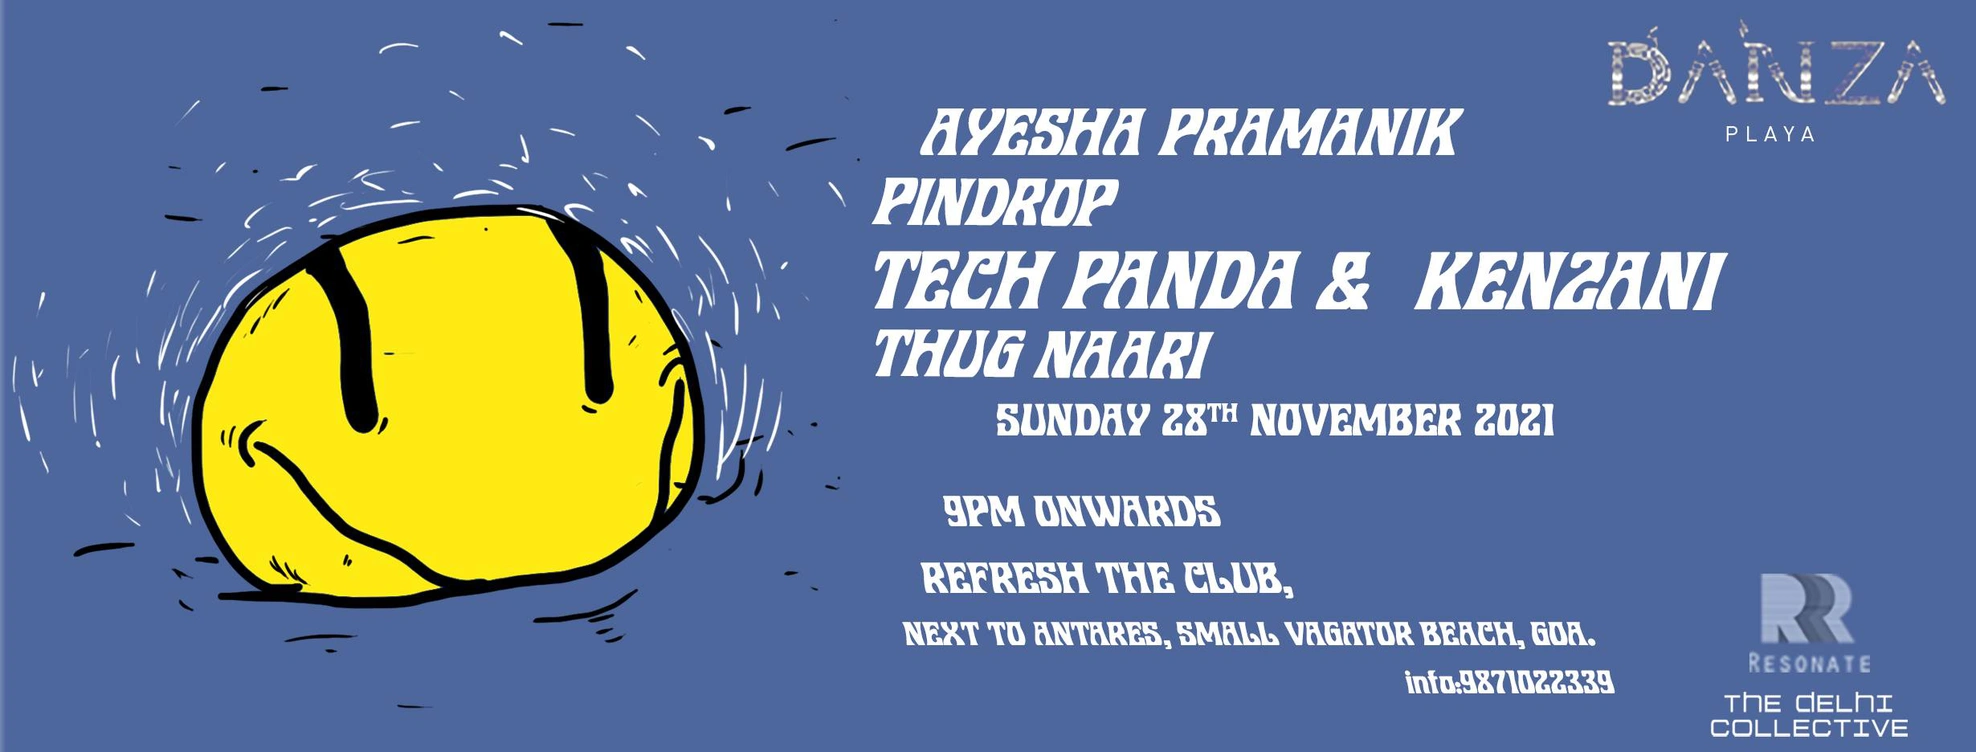 Danza Playa - Tech Panda & Kenzani / Ayesha Pramanik